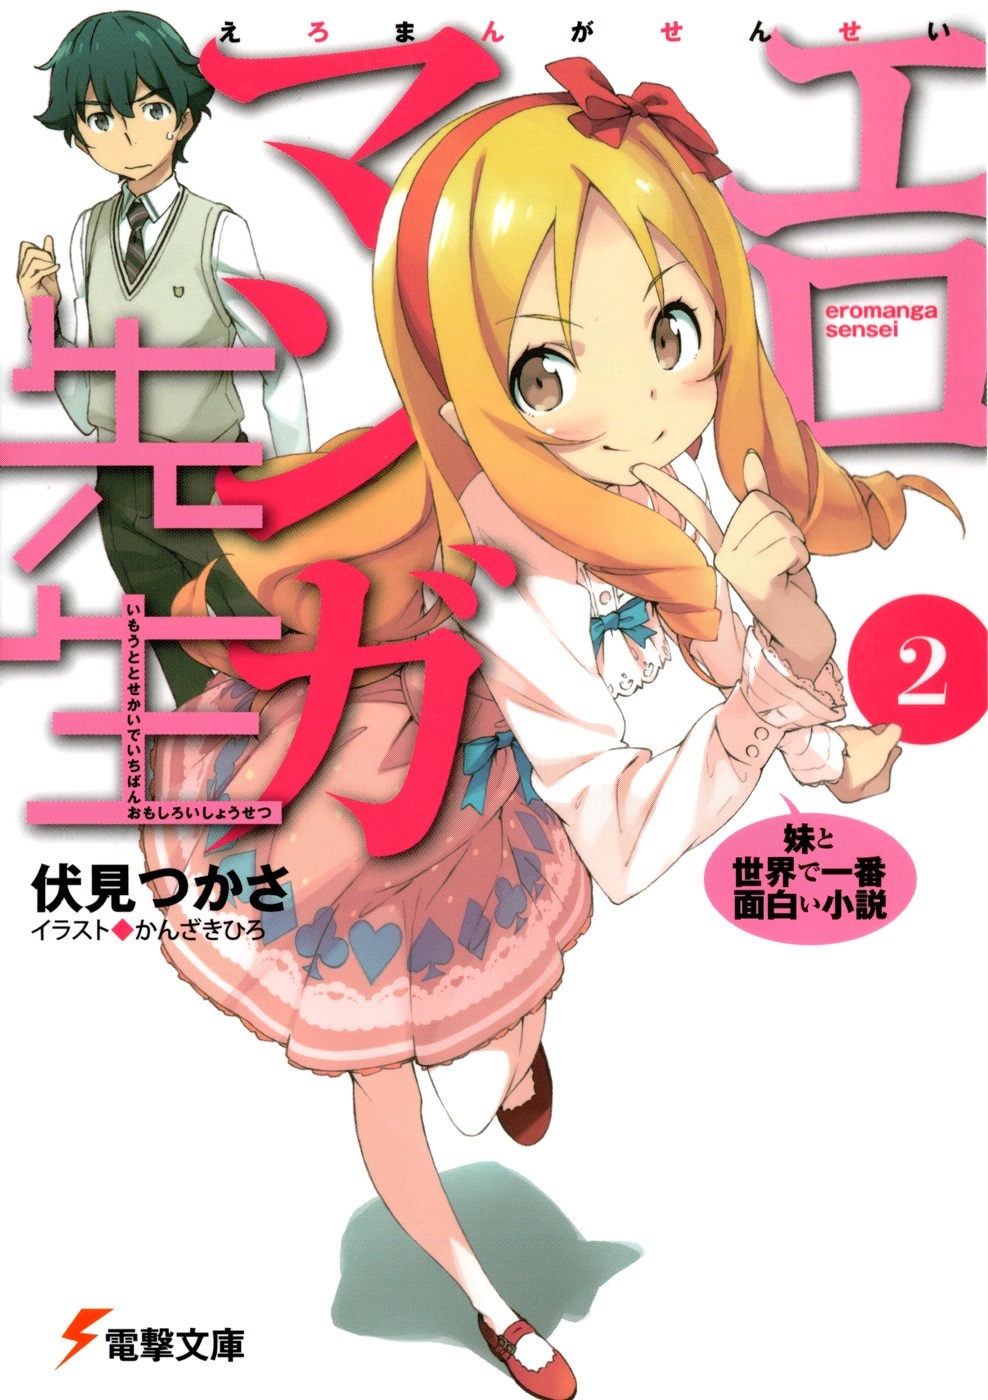 File Eromanga Sensei Vol2 Cover Baka Tsuki